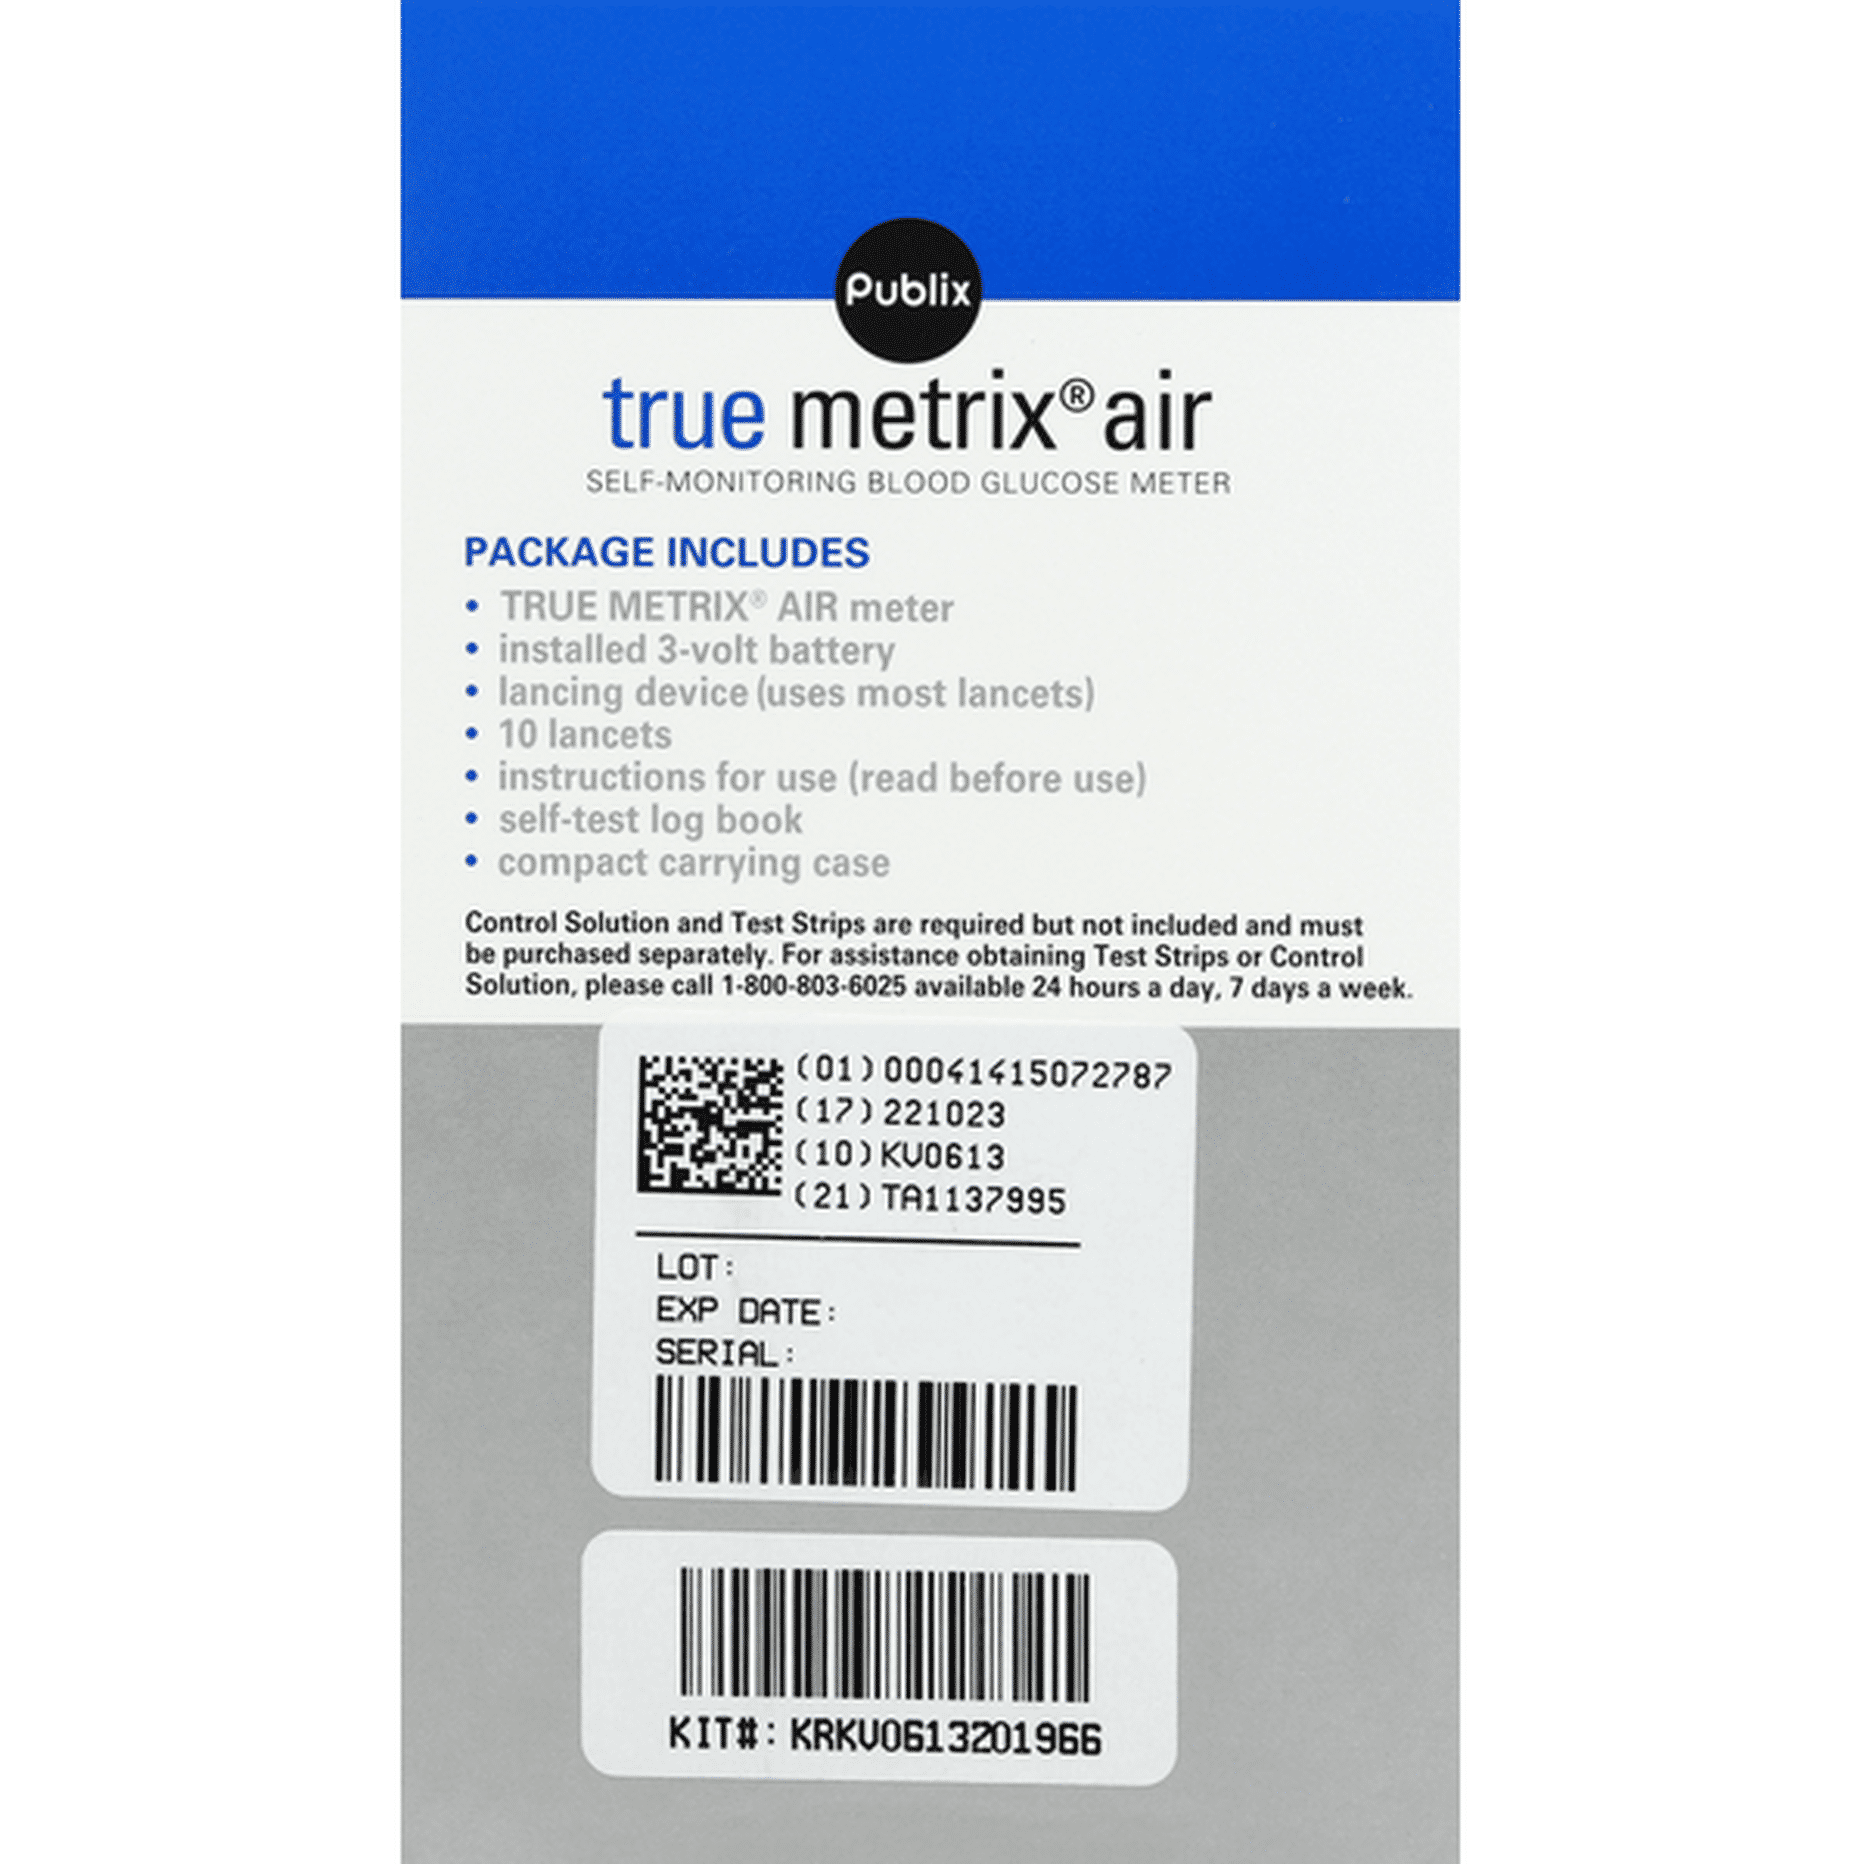 Publix SelfMonitoring Blood Glucose Meter, True Metrix Air (1 each